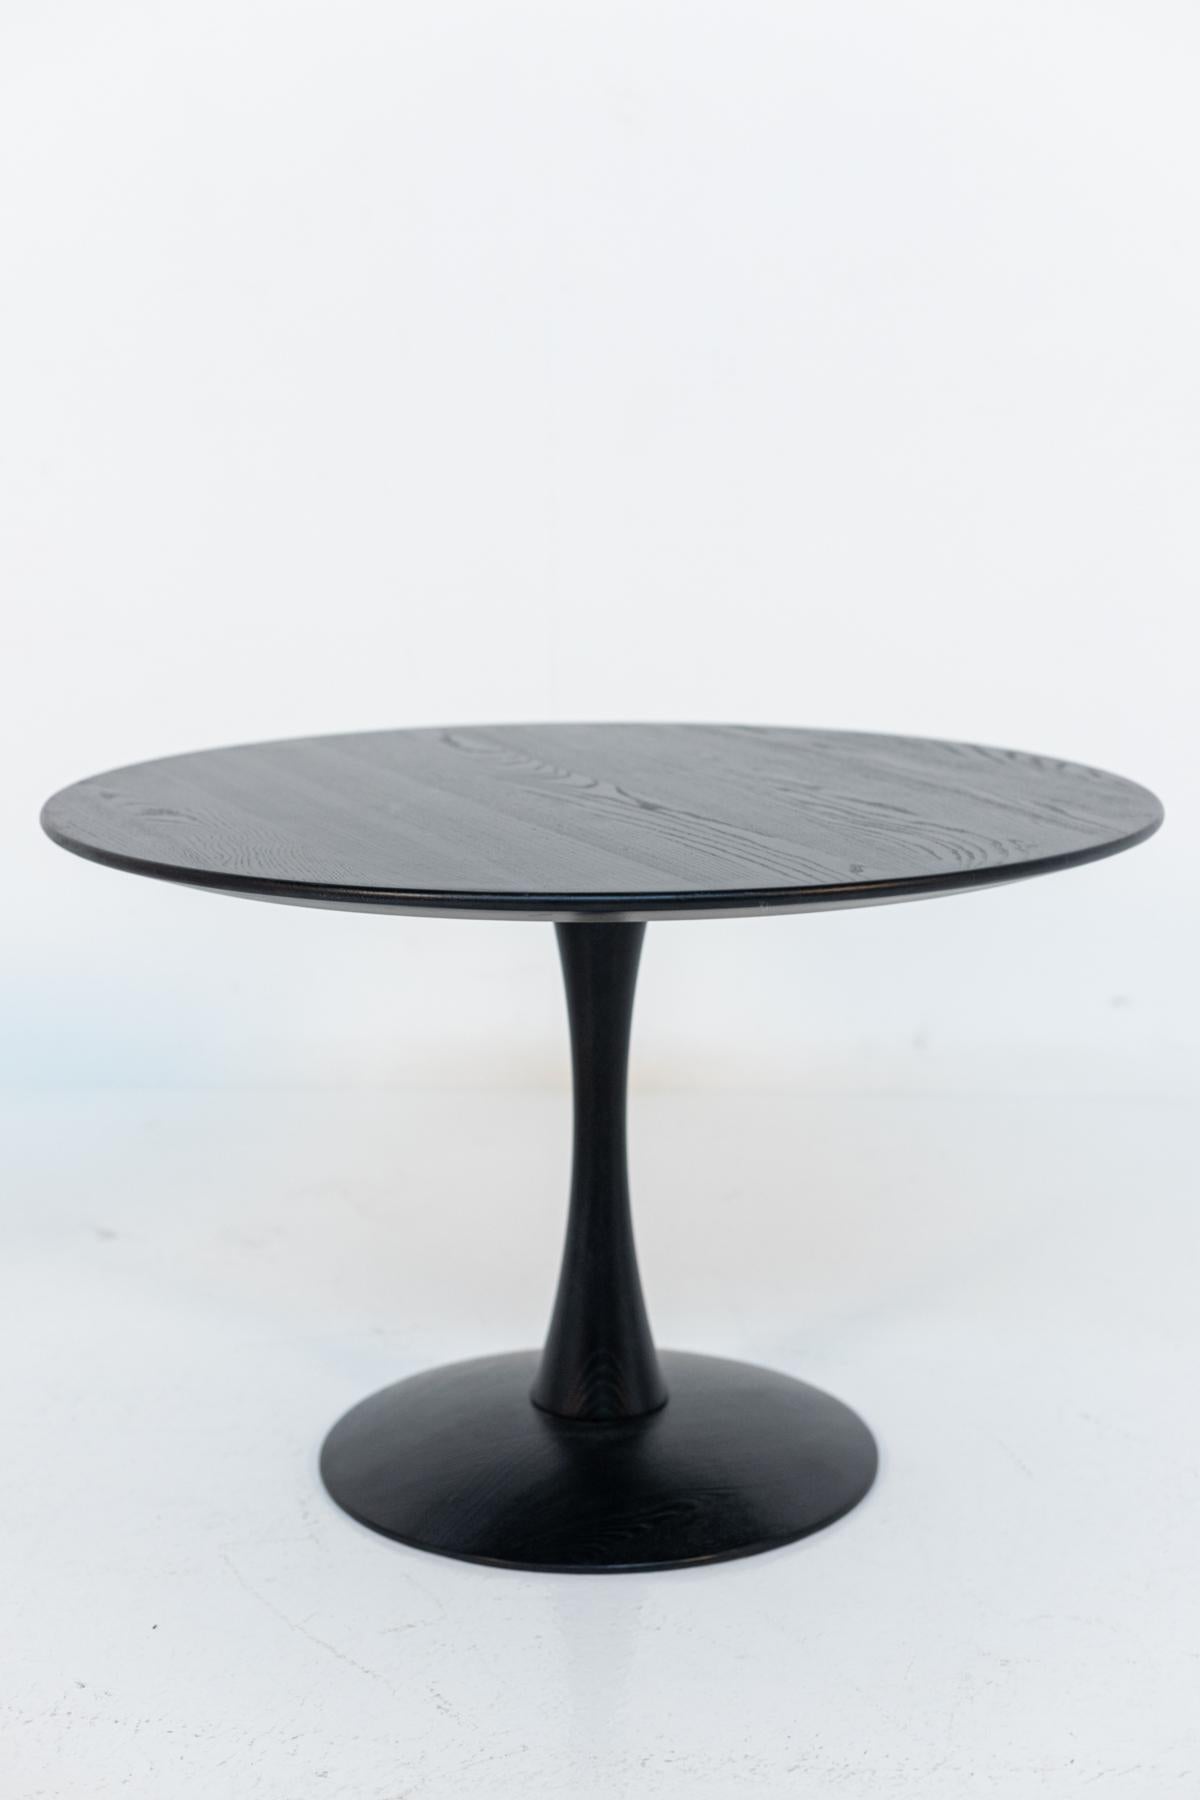 Nanna Ditzel Black Danish Coffee Table For Sale 4